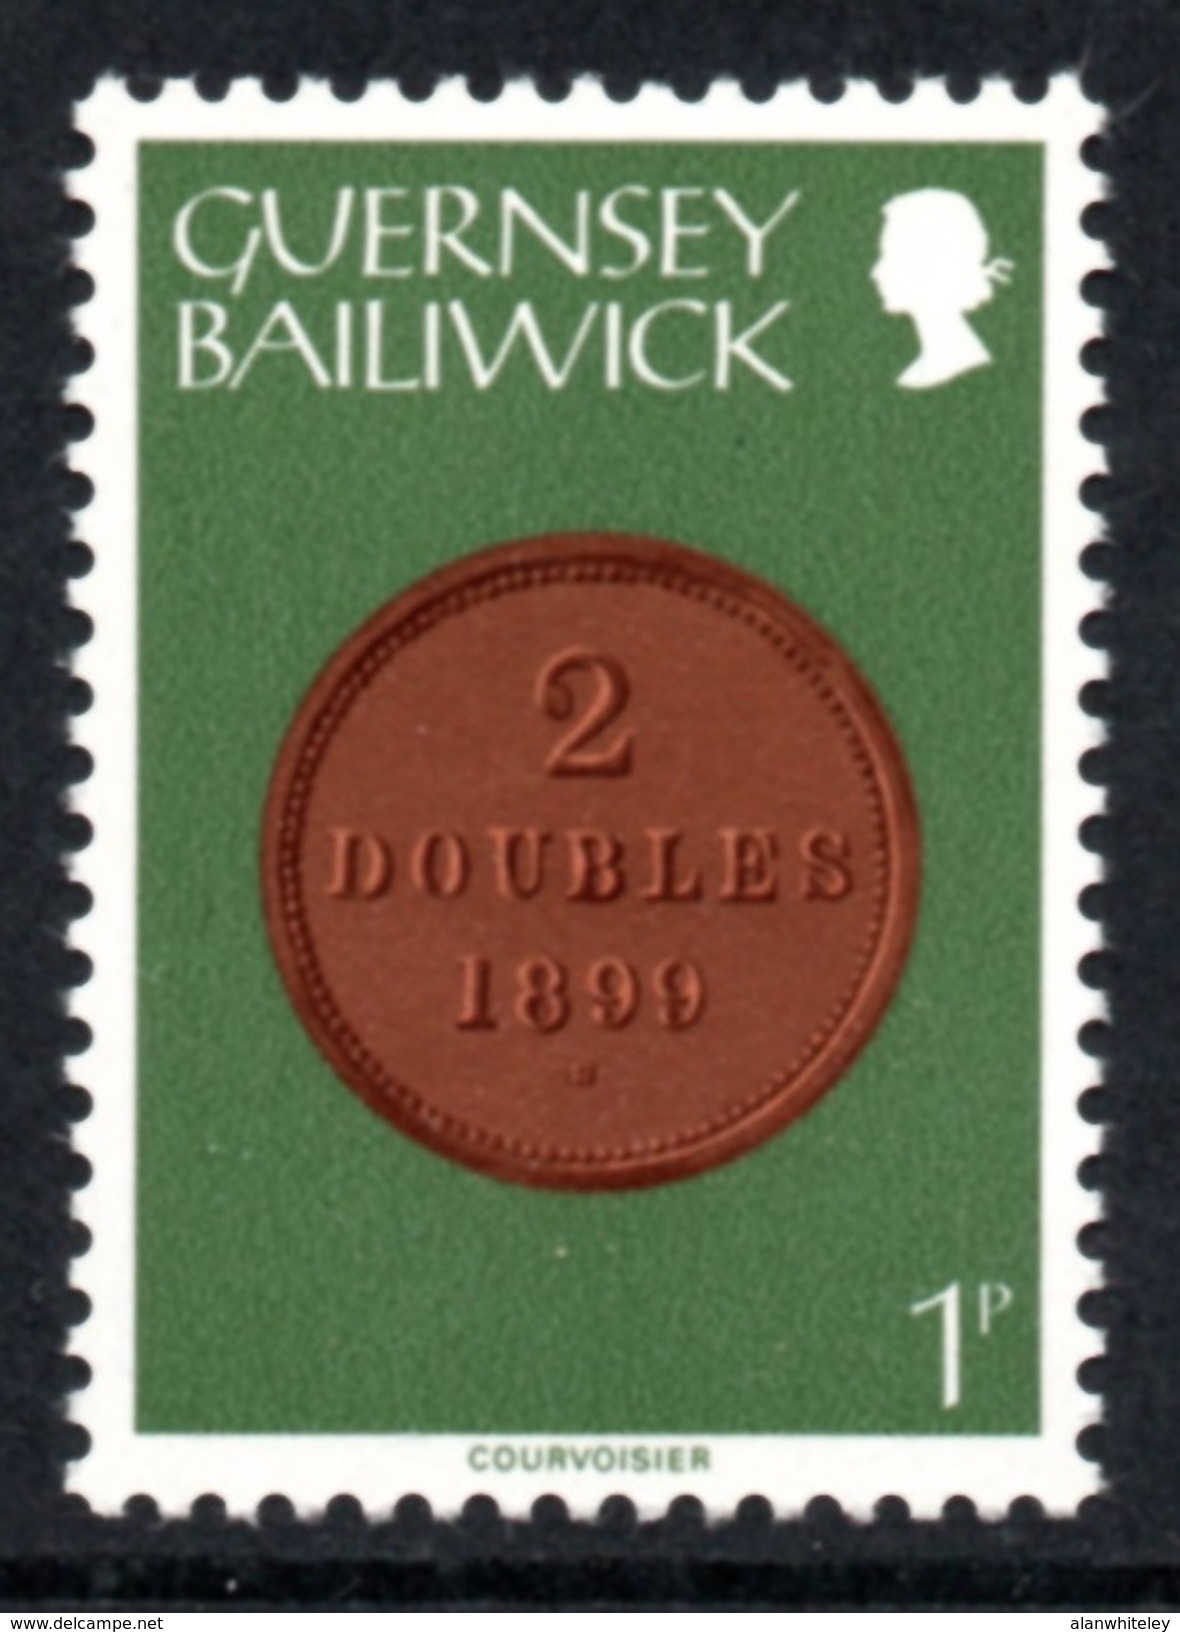 GUERNSEY 1979 Definitives / Coins 1p: Single Stamp UM/MNH - Guernesey